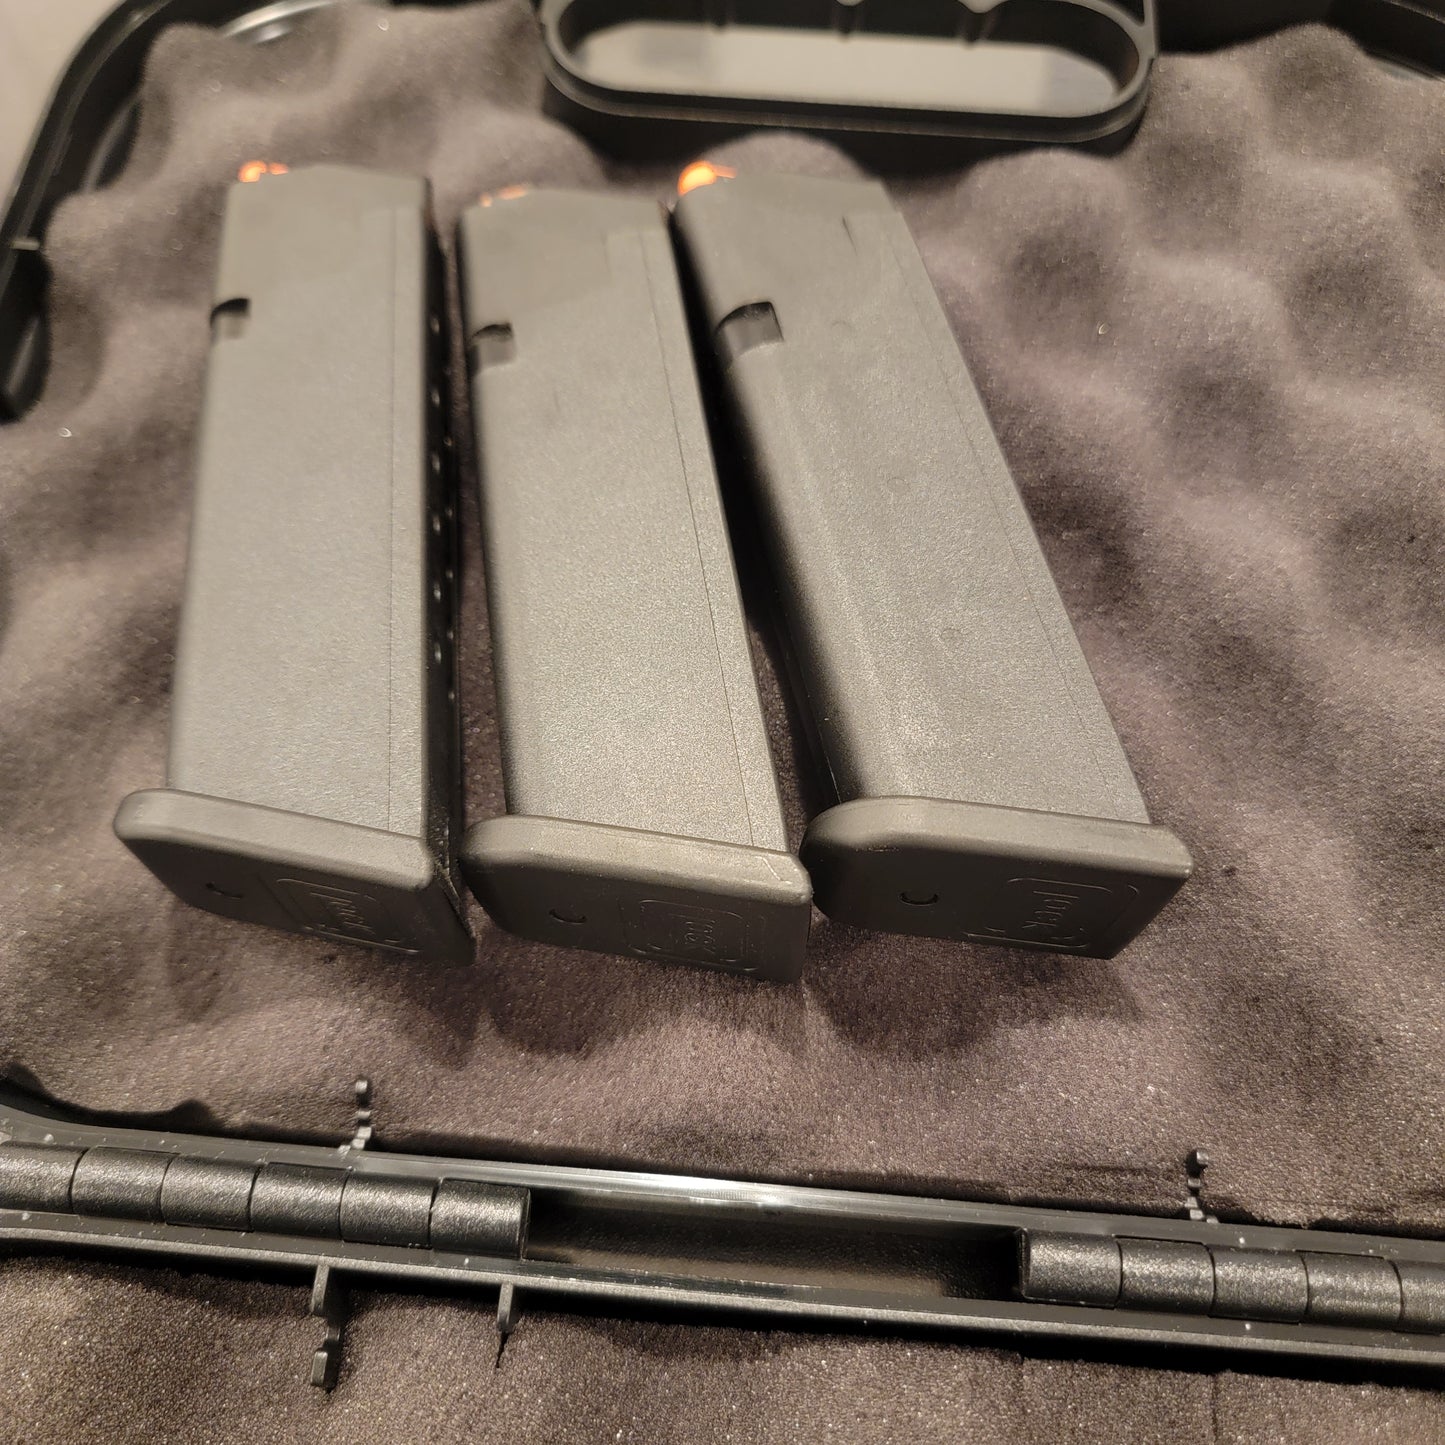 GLOCK 22 - G22 GEN5 Semiautomatic .40 S&W Centerfire Pistol 3x15 mags